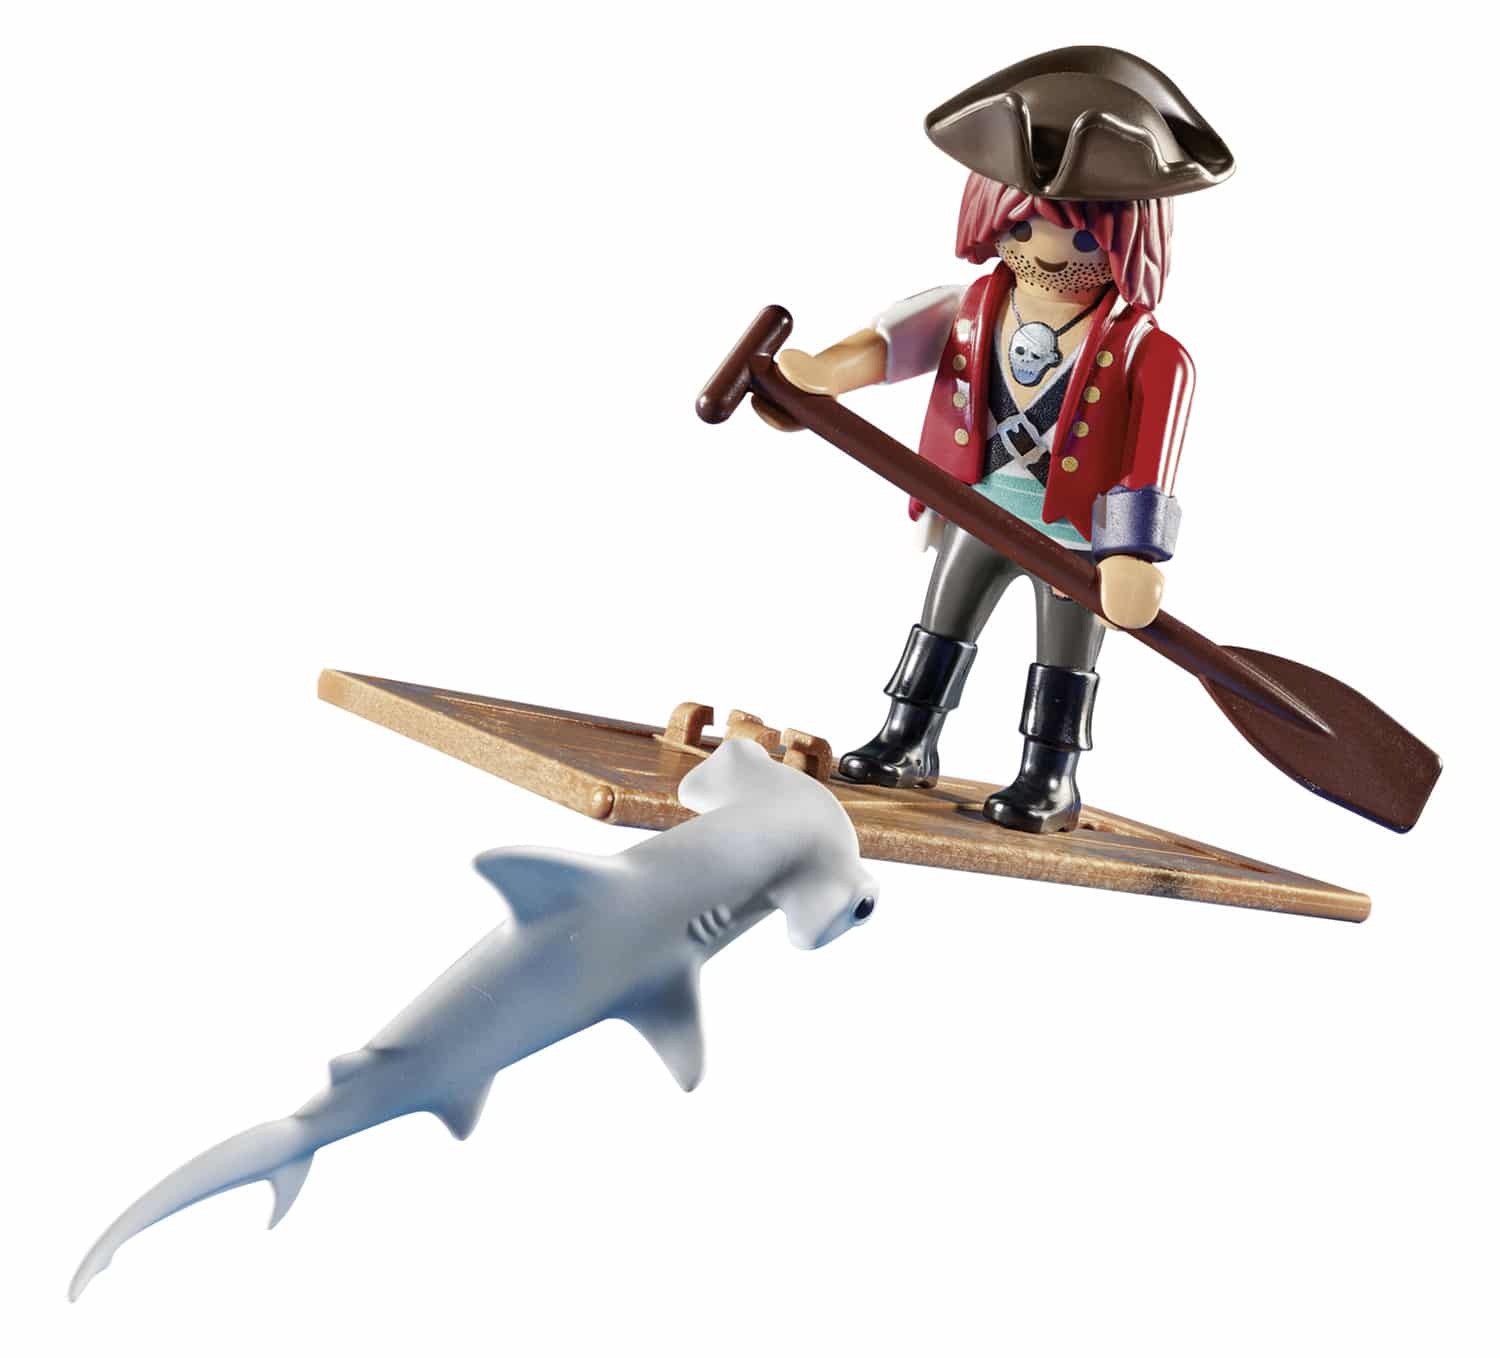 70598 Playmobil Πειρατης Με Σχεδια Και Σφυροκεφαλος Καρχαριας